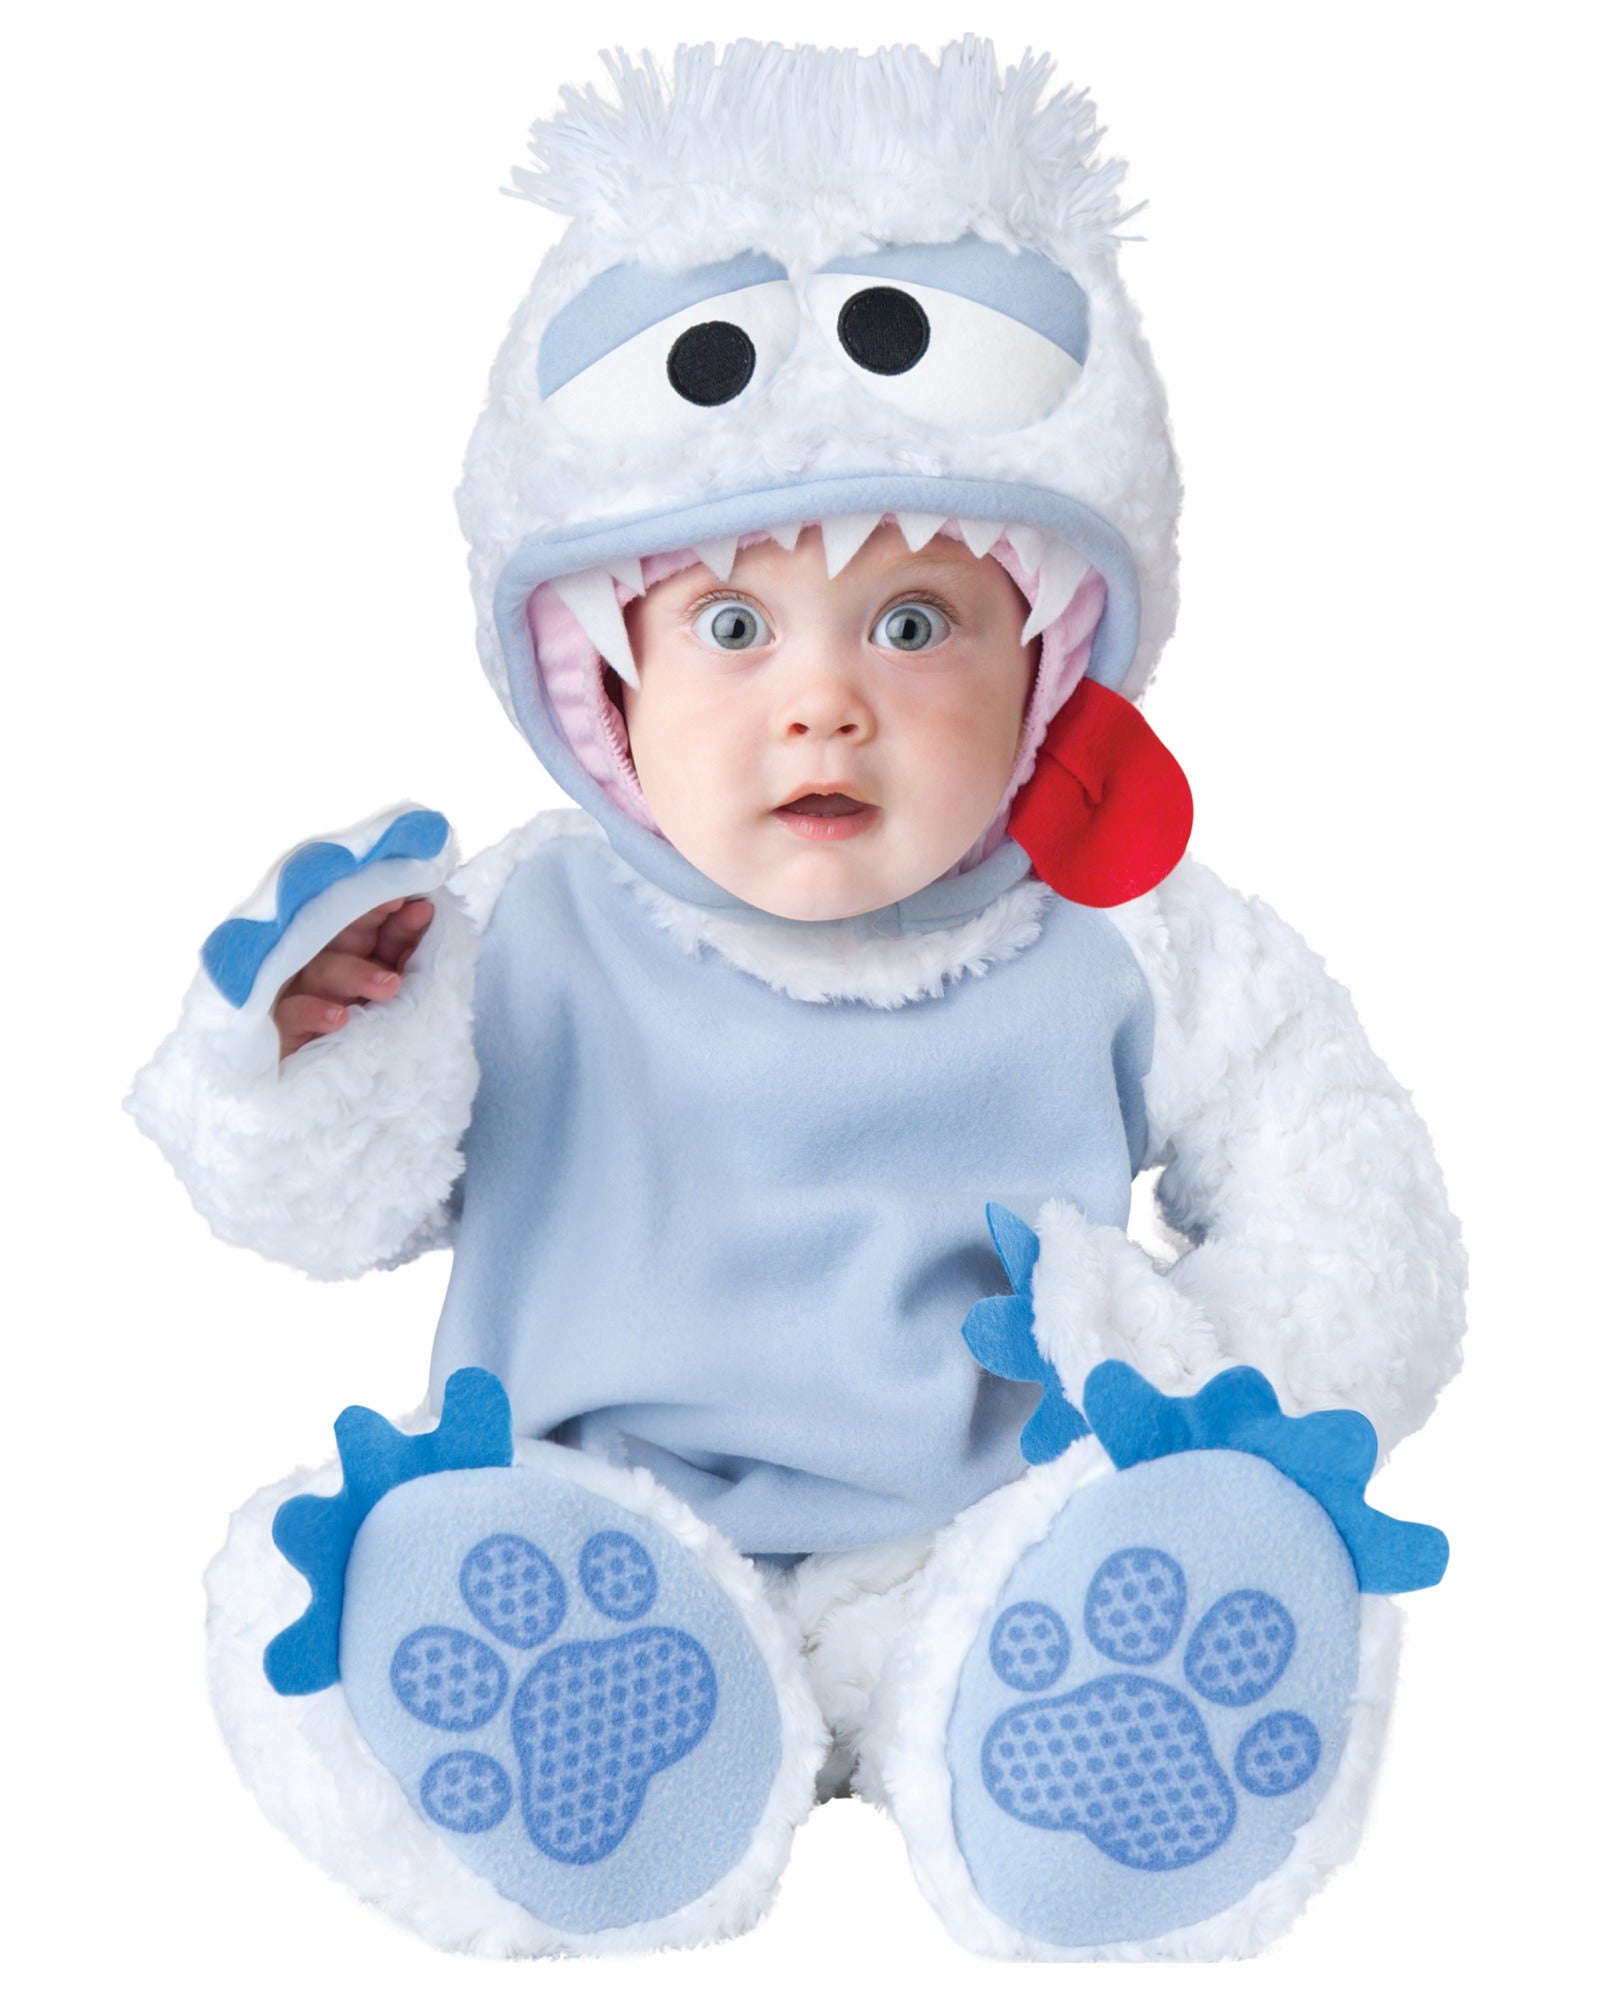 Hobbypos Abominable Snowbaby Yeti Bigfoot Deluxe Baby Boys Infant Costume